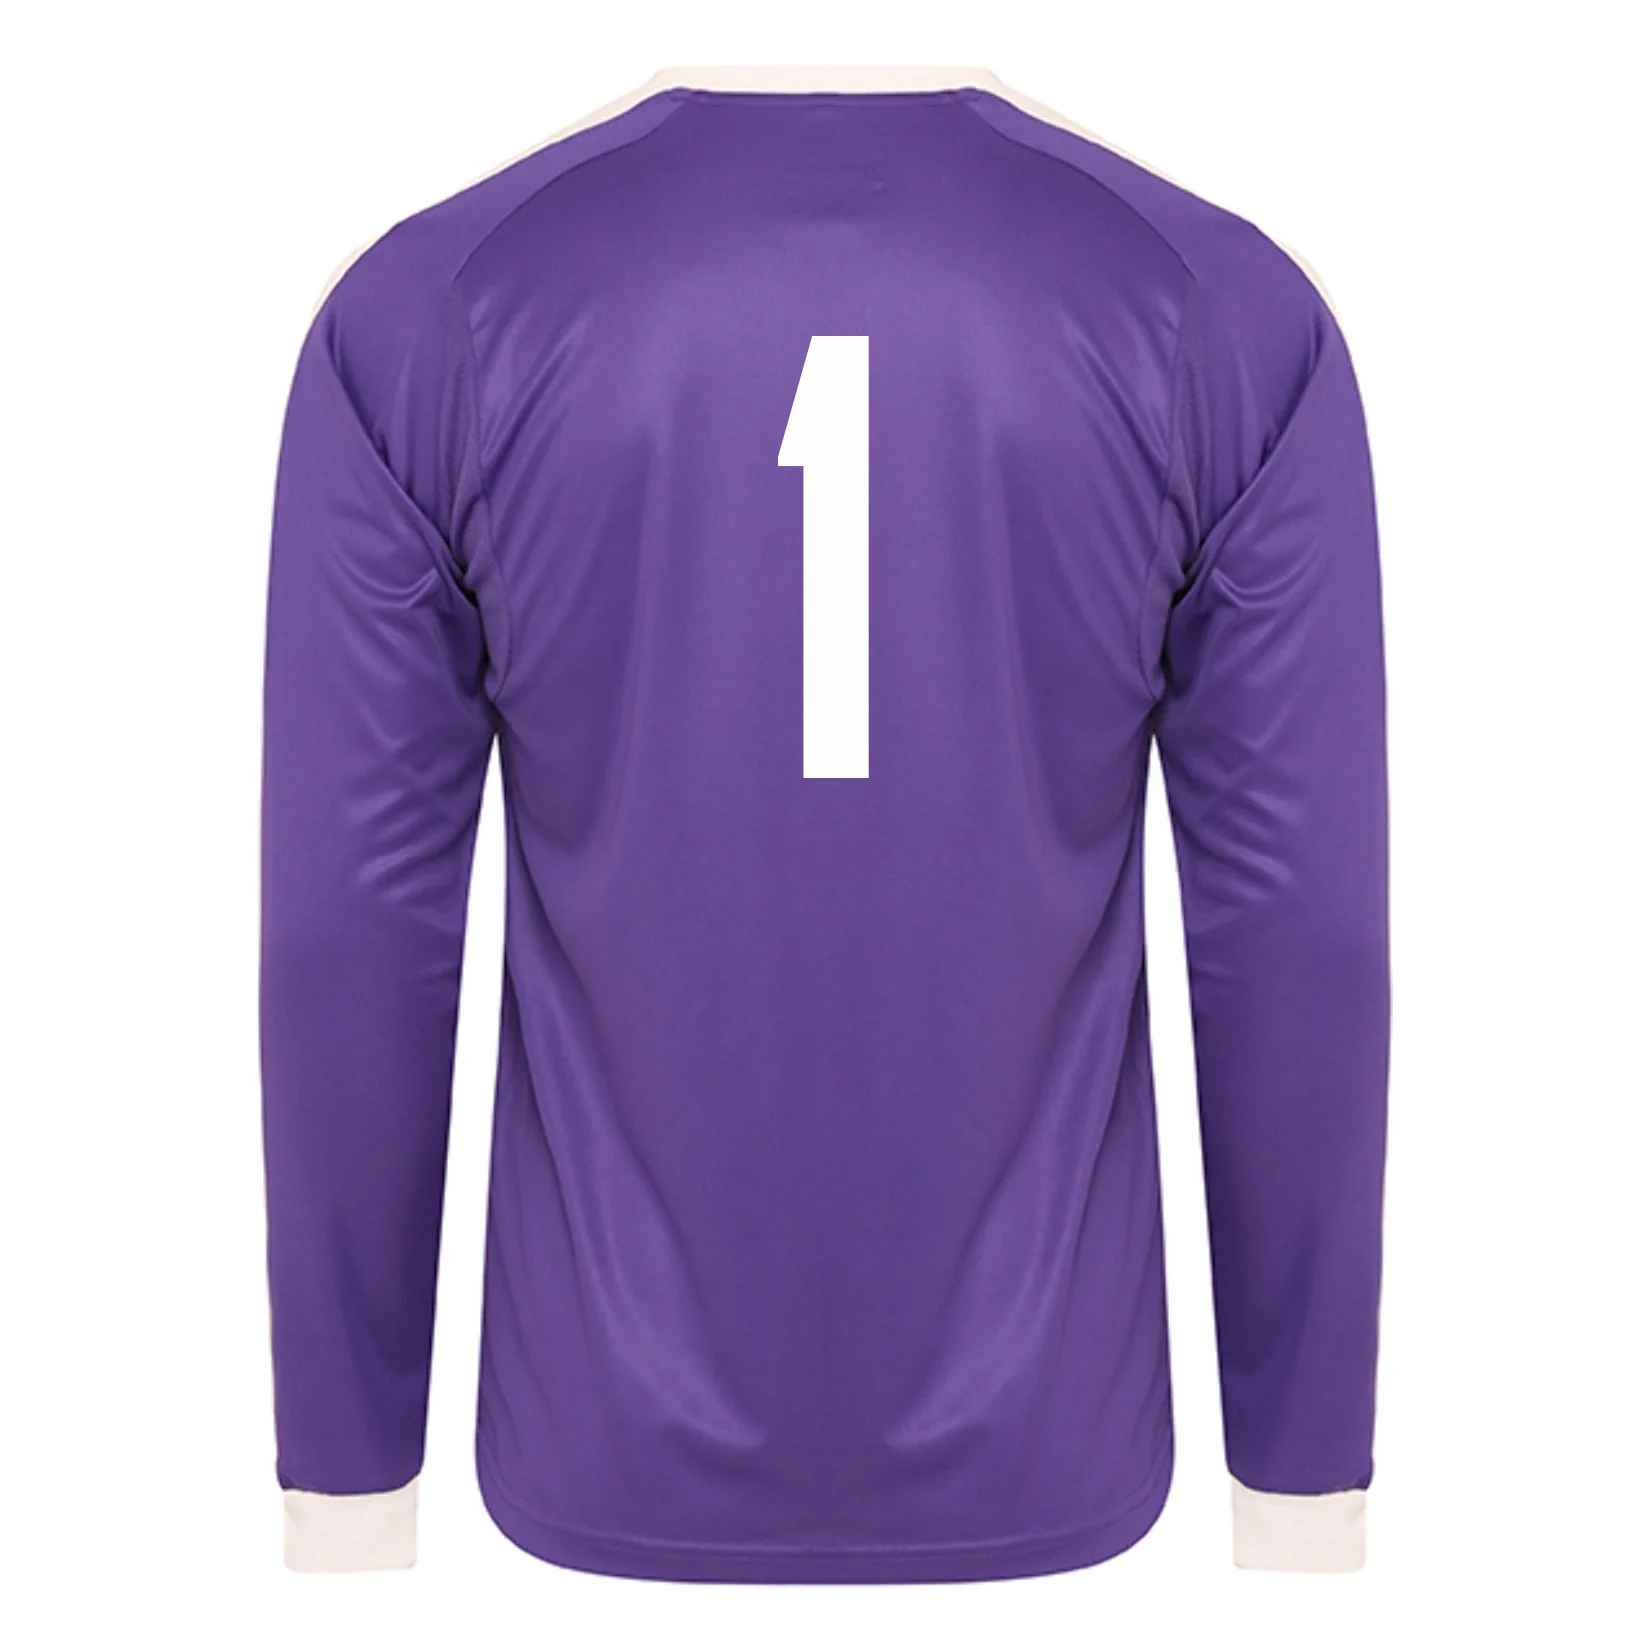 Puma Liga Goalkeeper Shirt